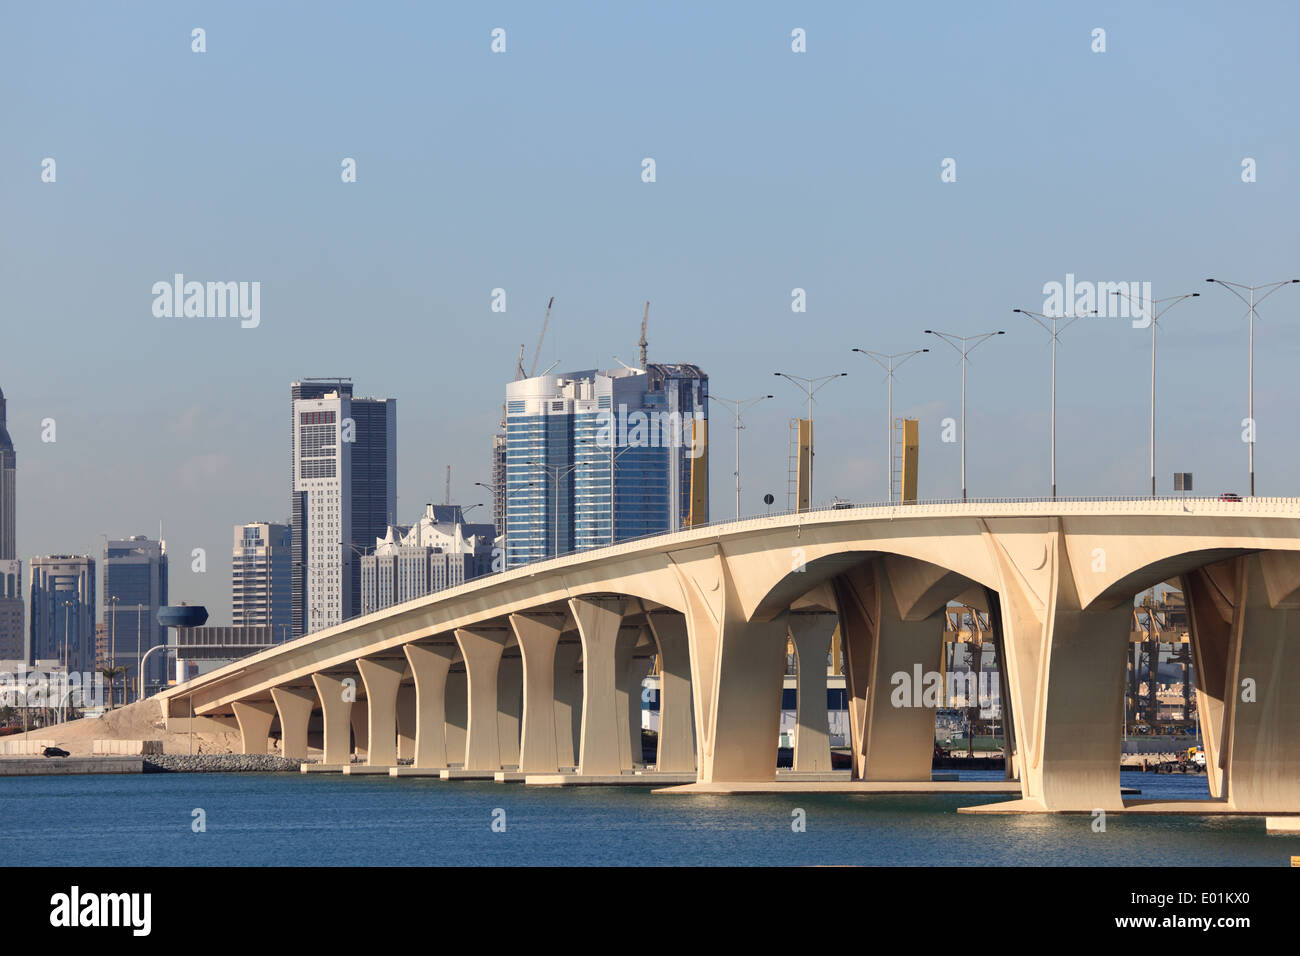 New Sheikh Khalifa Bridge in Abu Dhabi, United Arab Emirates Stock Photo